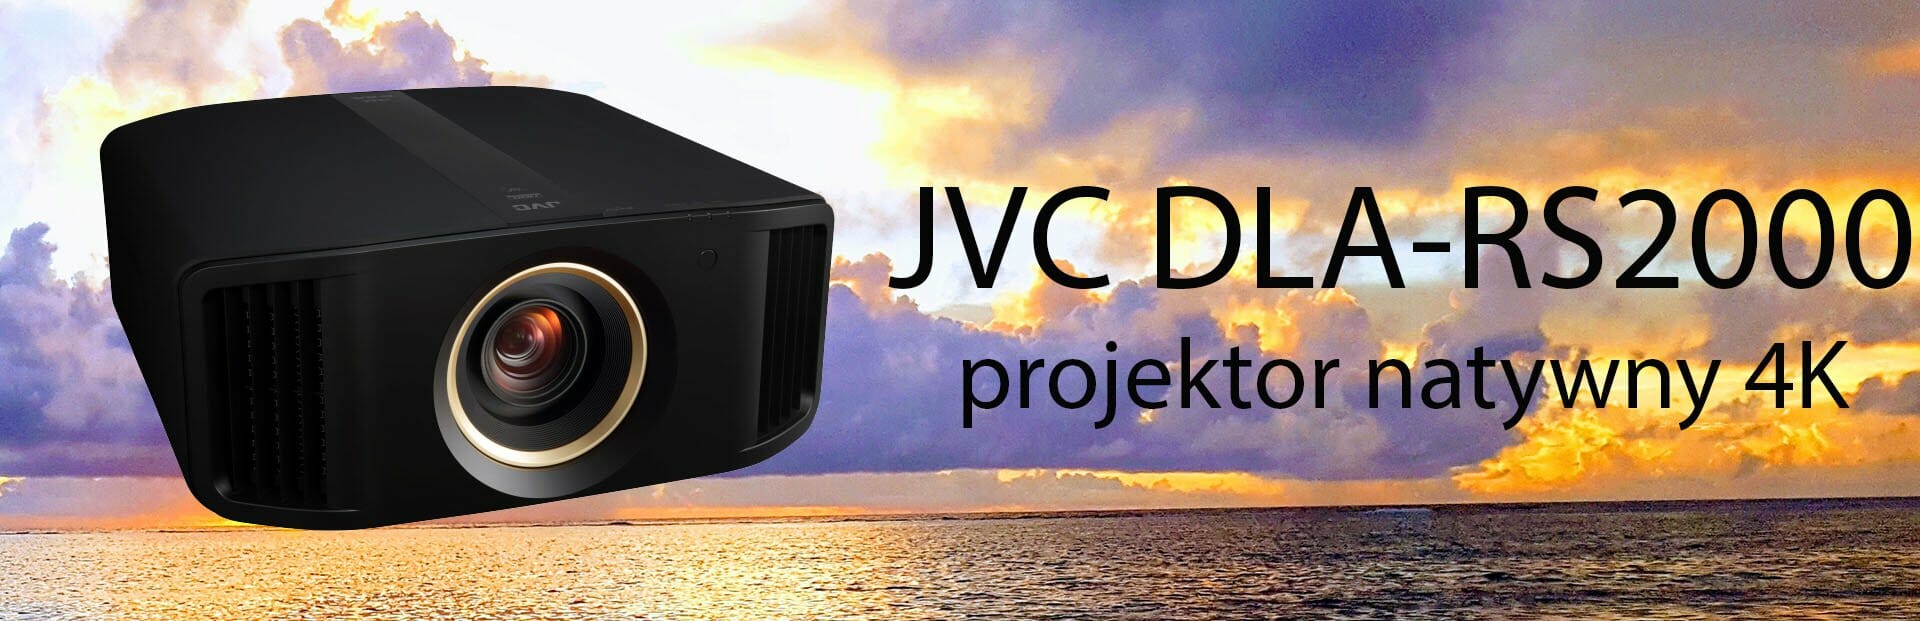 JVC DLA-RS2000